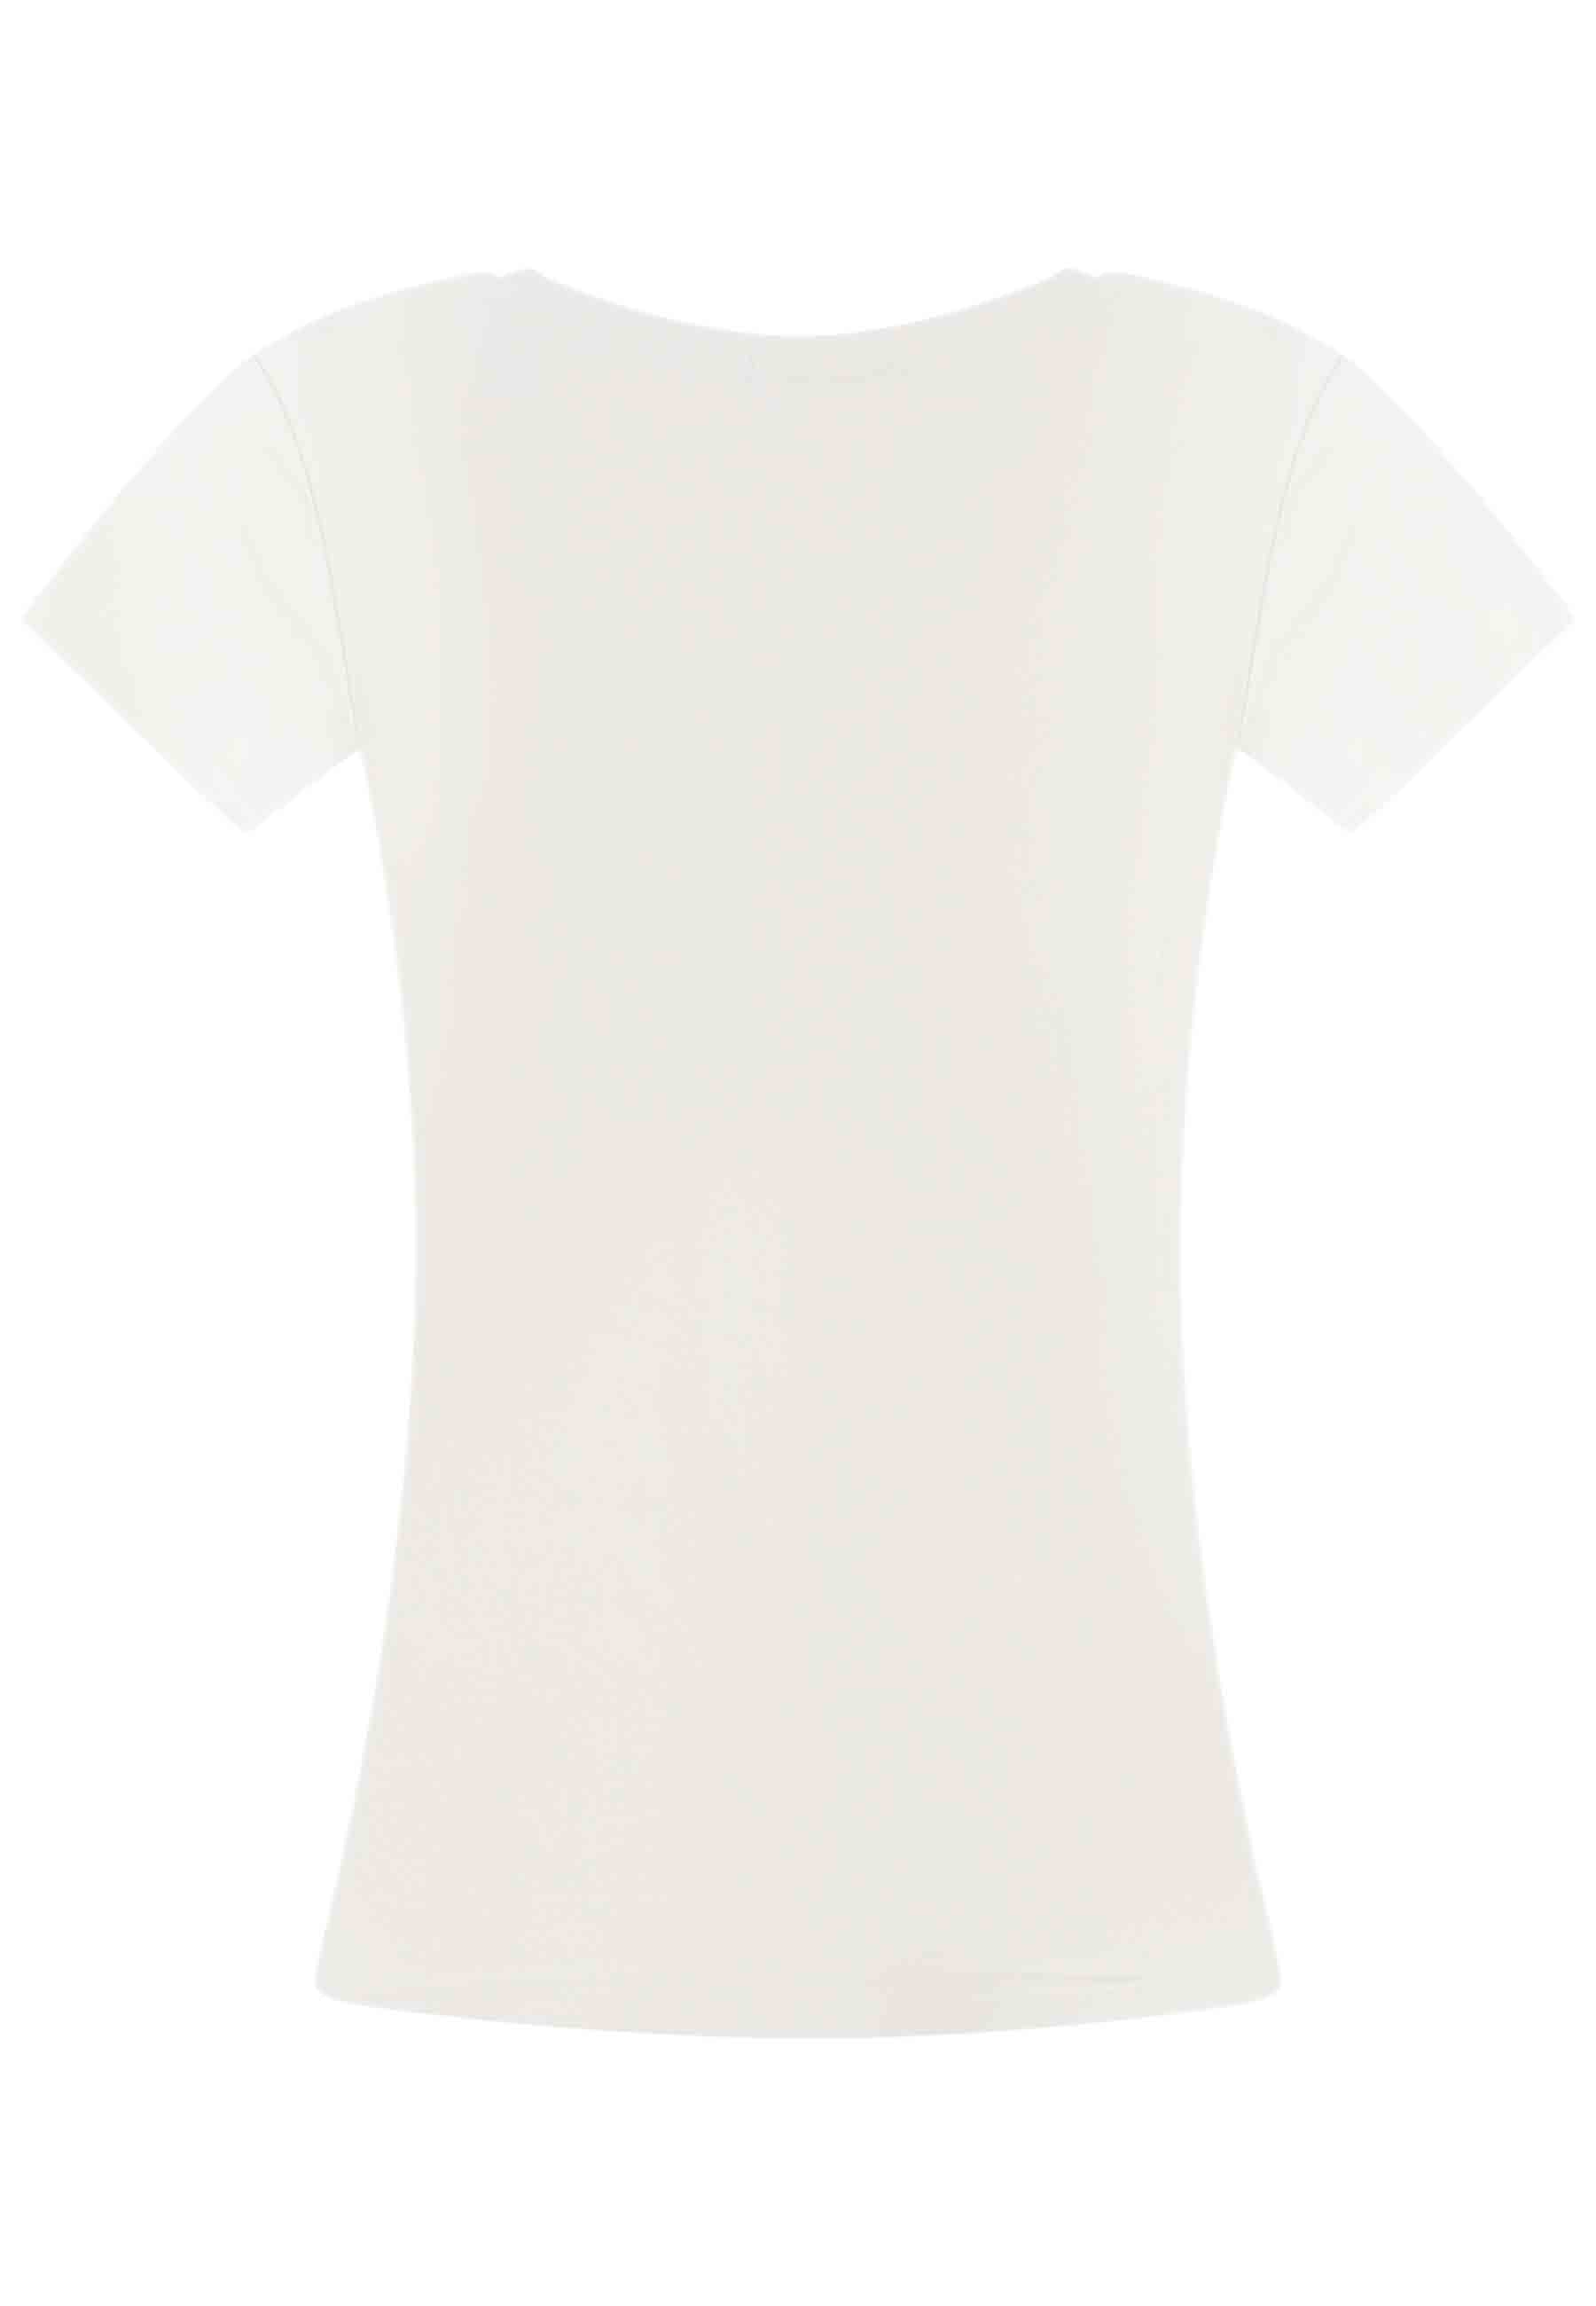 T-shirt donna Savage in cotone bianco con stampa in seta